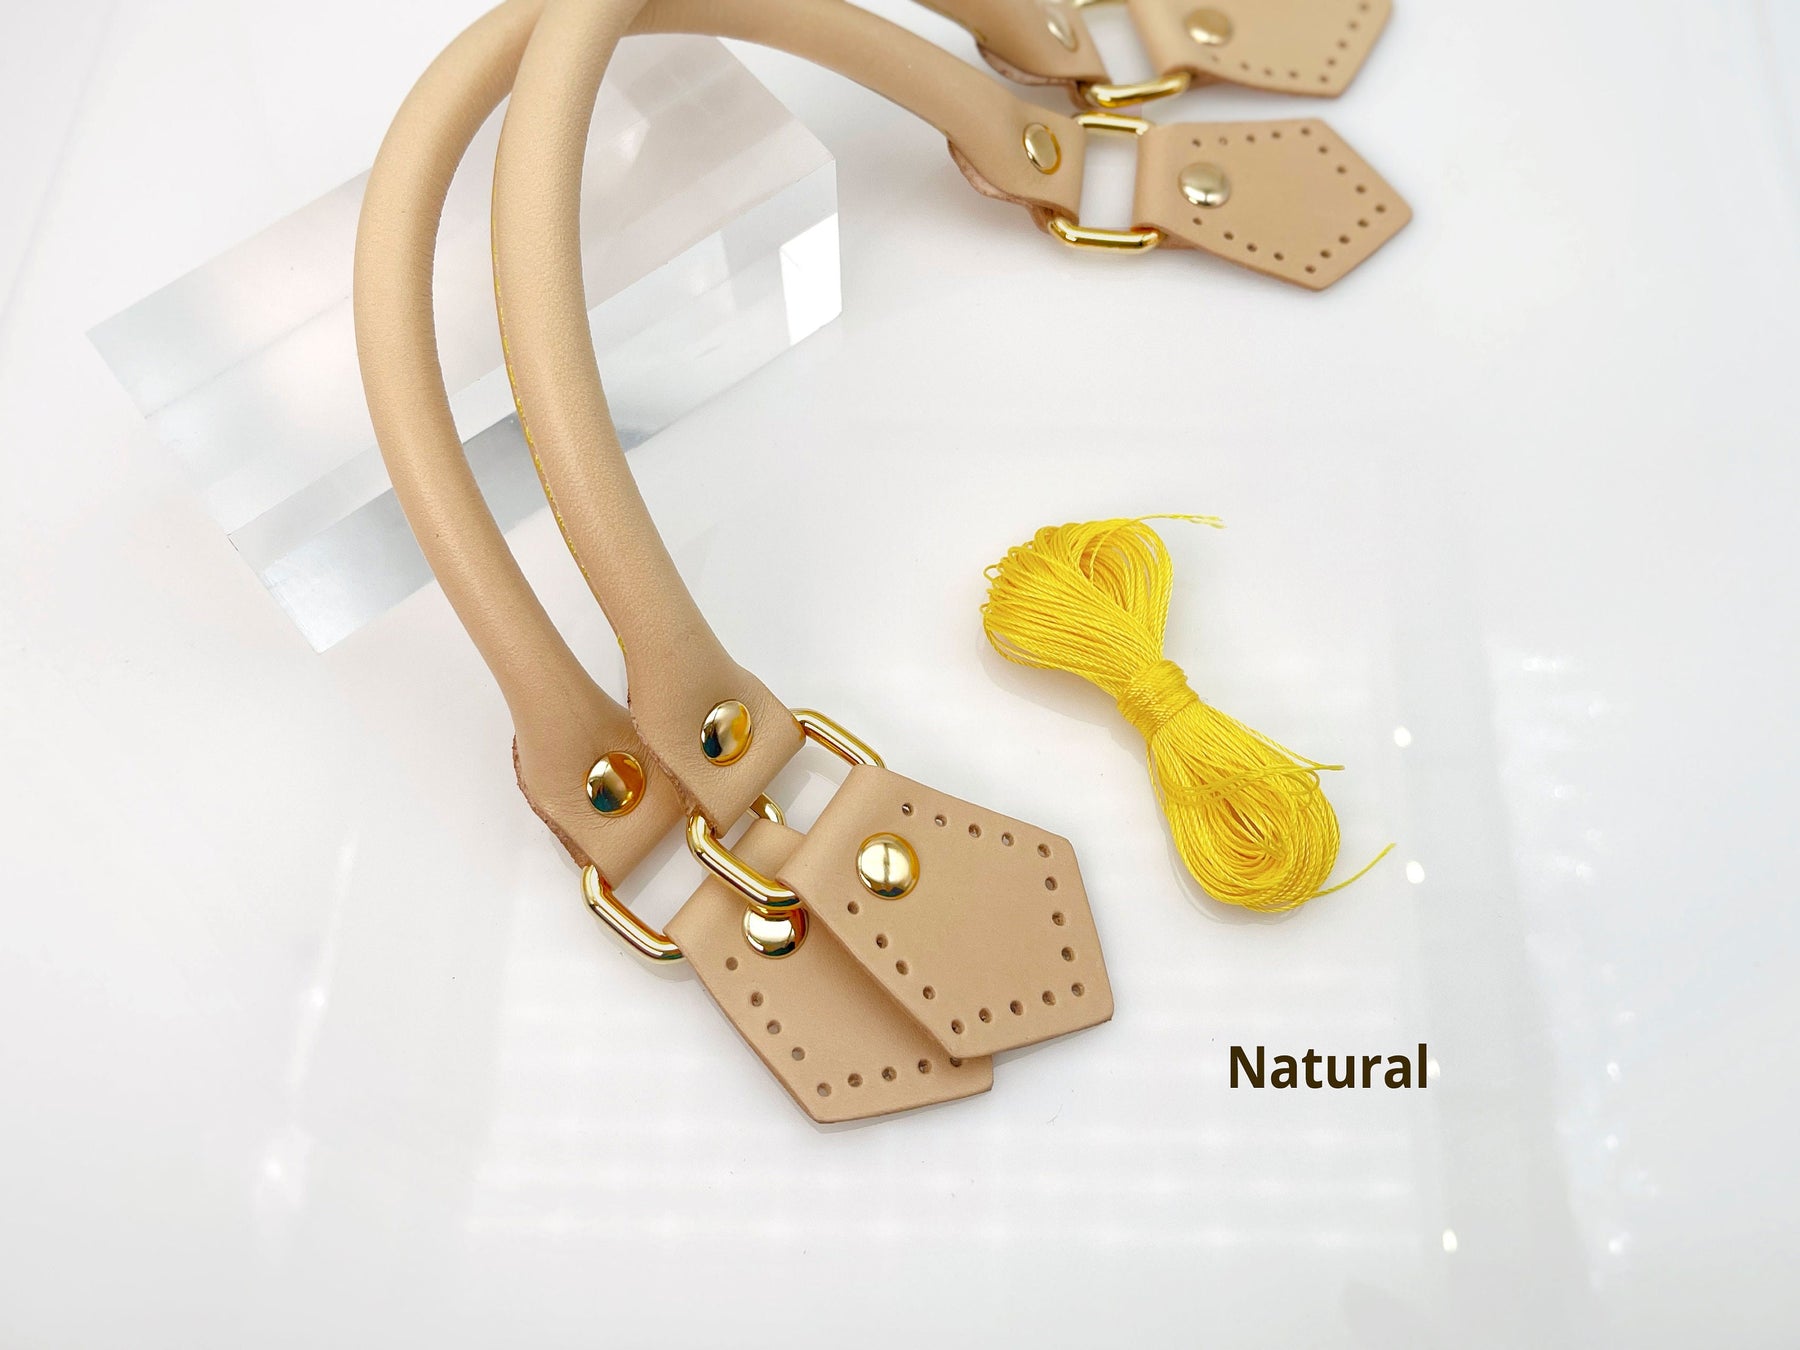 Mcraft® Handmade Vachetta Leather Handle Protector Cover Strap